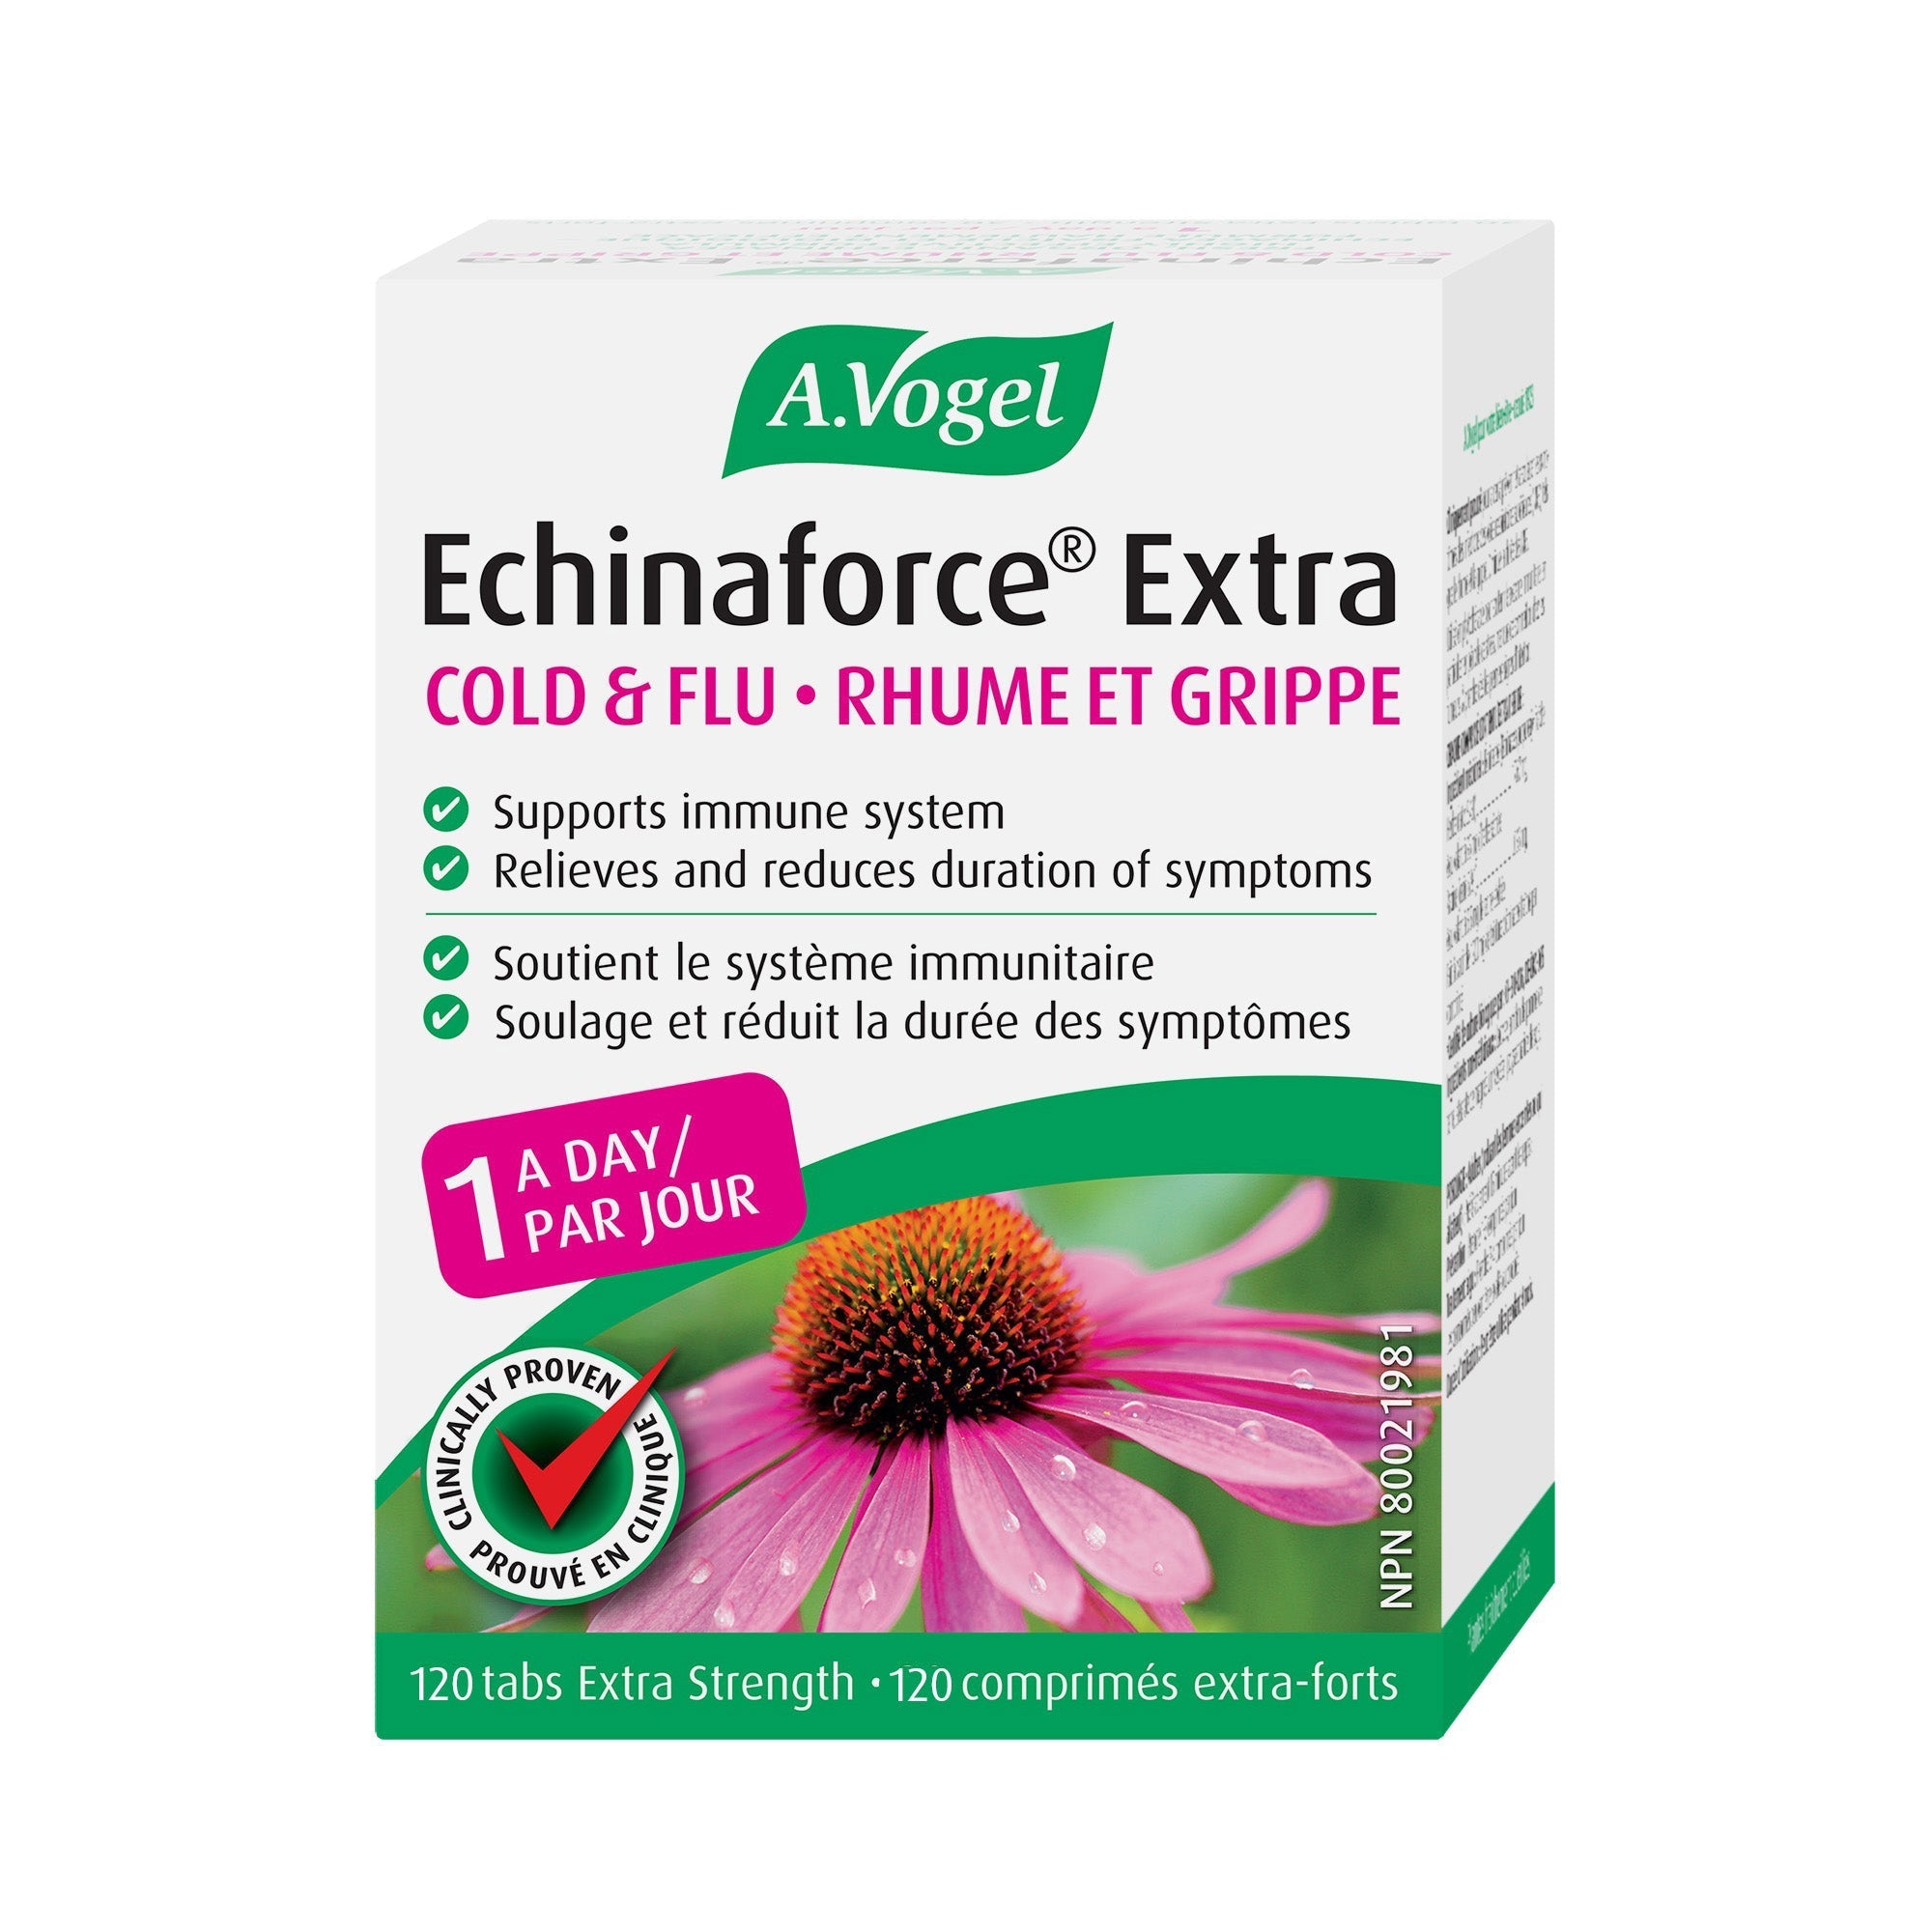 A. Vogel Echinaforce Extra 120 Tablets